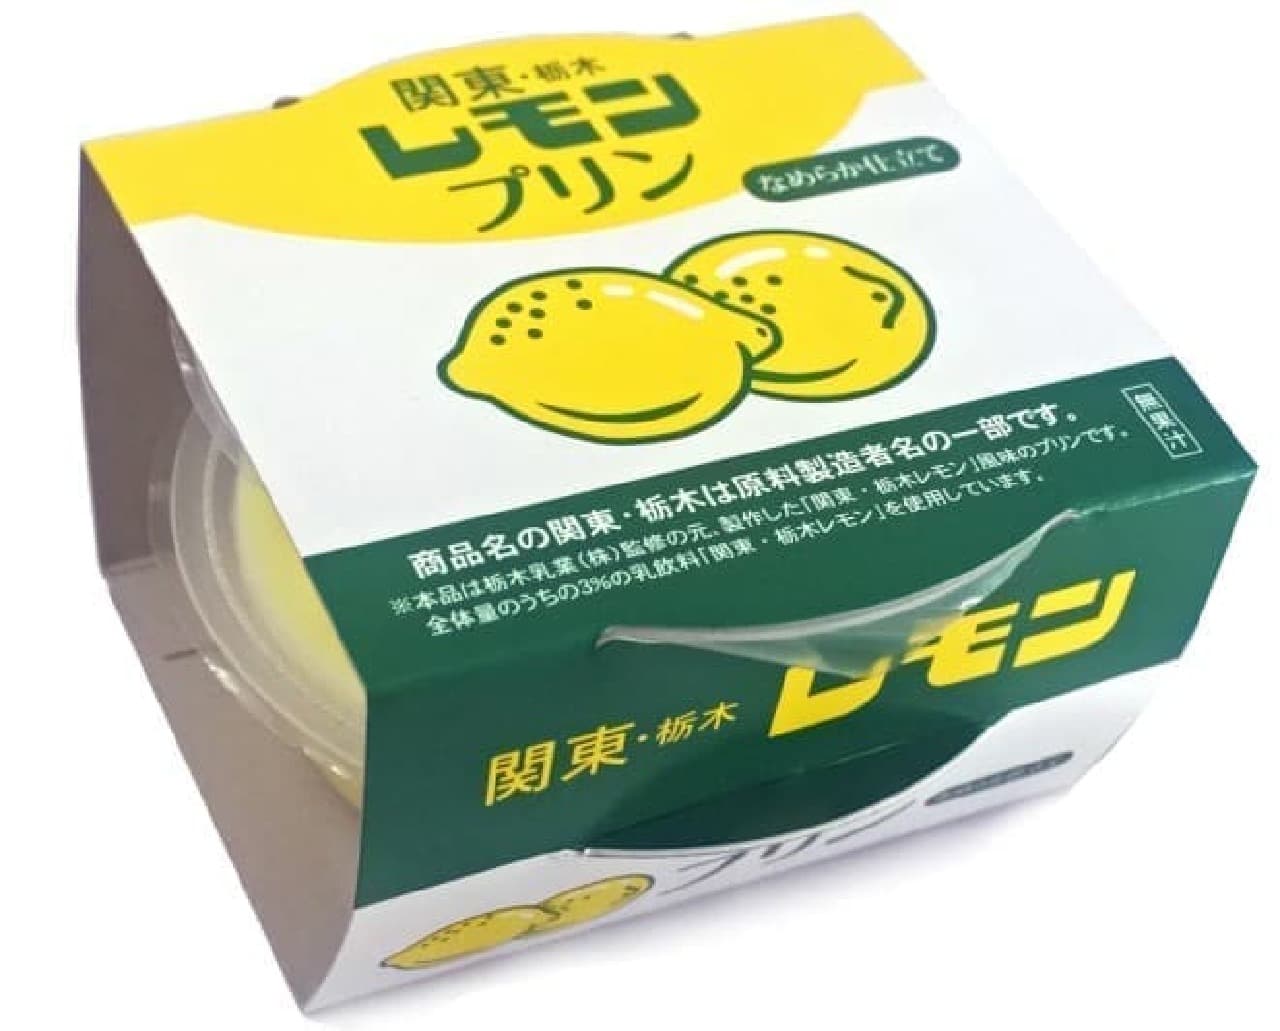 "Kanto / Tochigi Lemon Pudding" which became "Kanto / Tochigi Lemon"